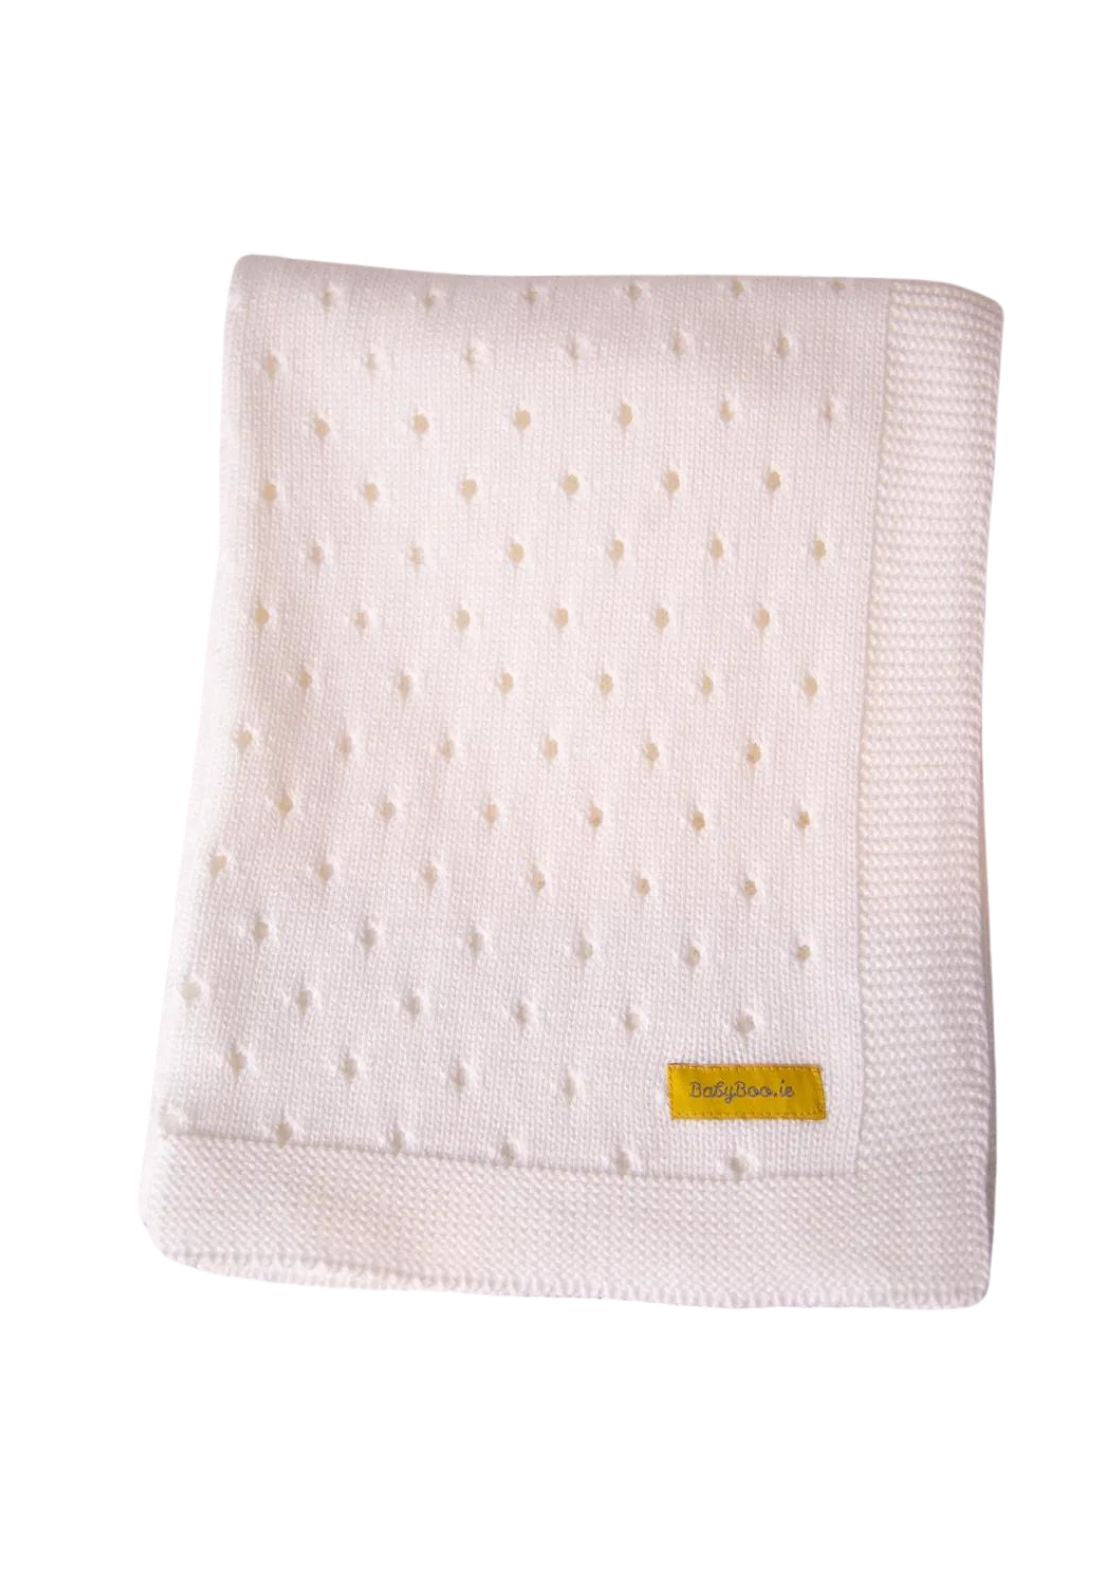 Babyboo Cellular Blanket - White 1 Shaws Department Stores